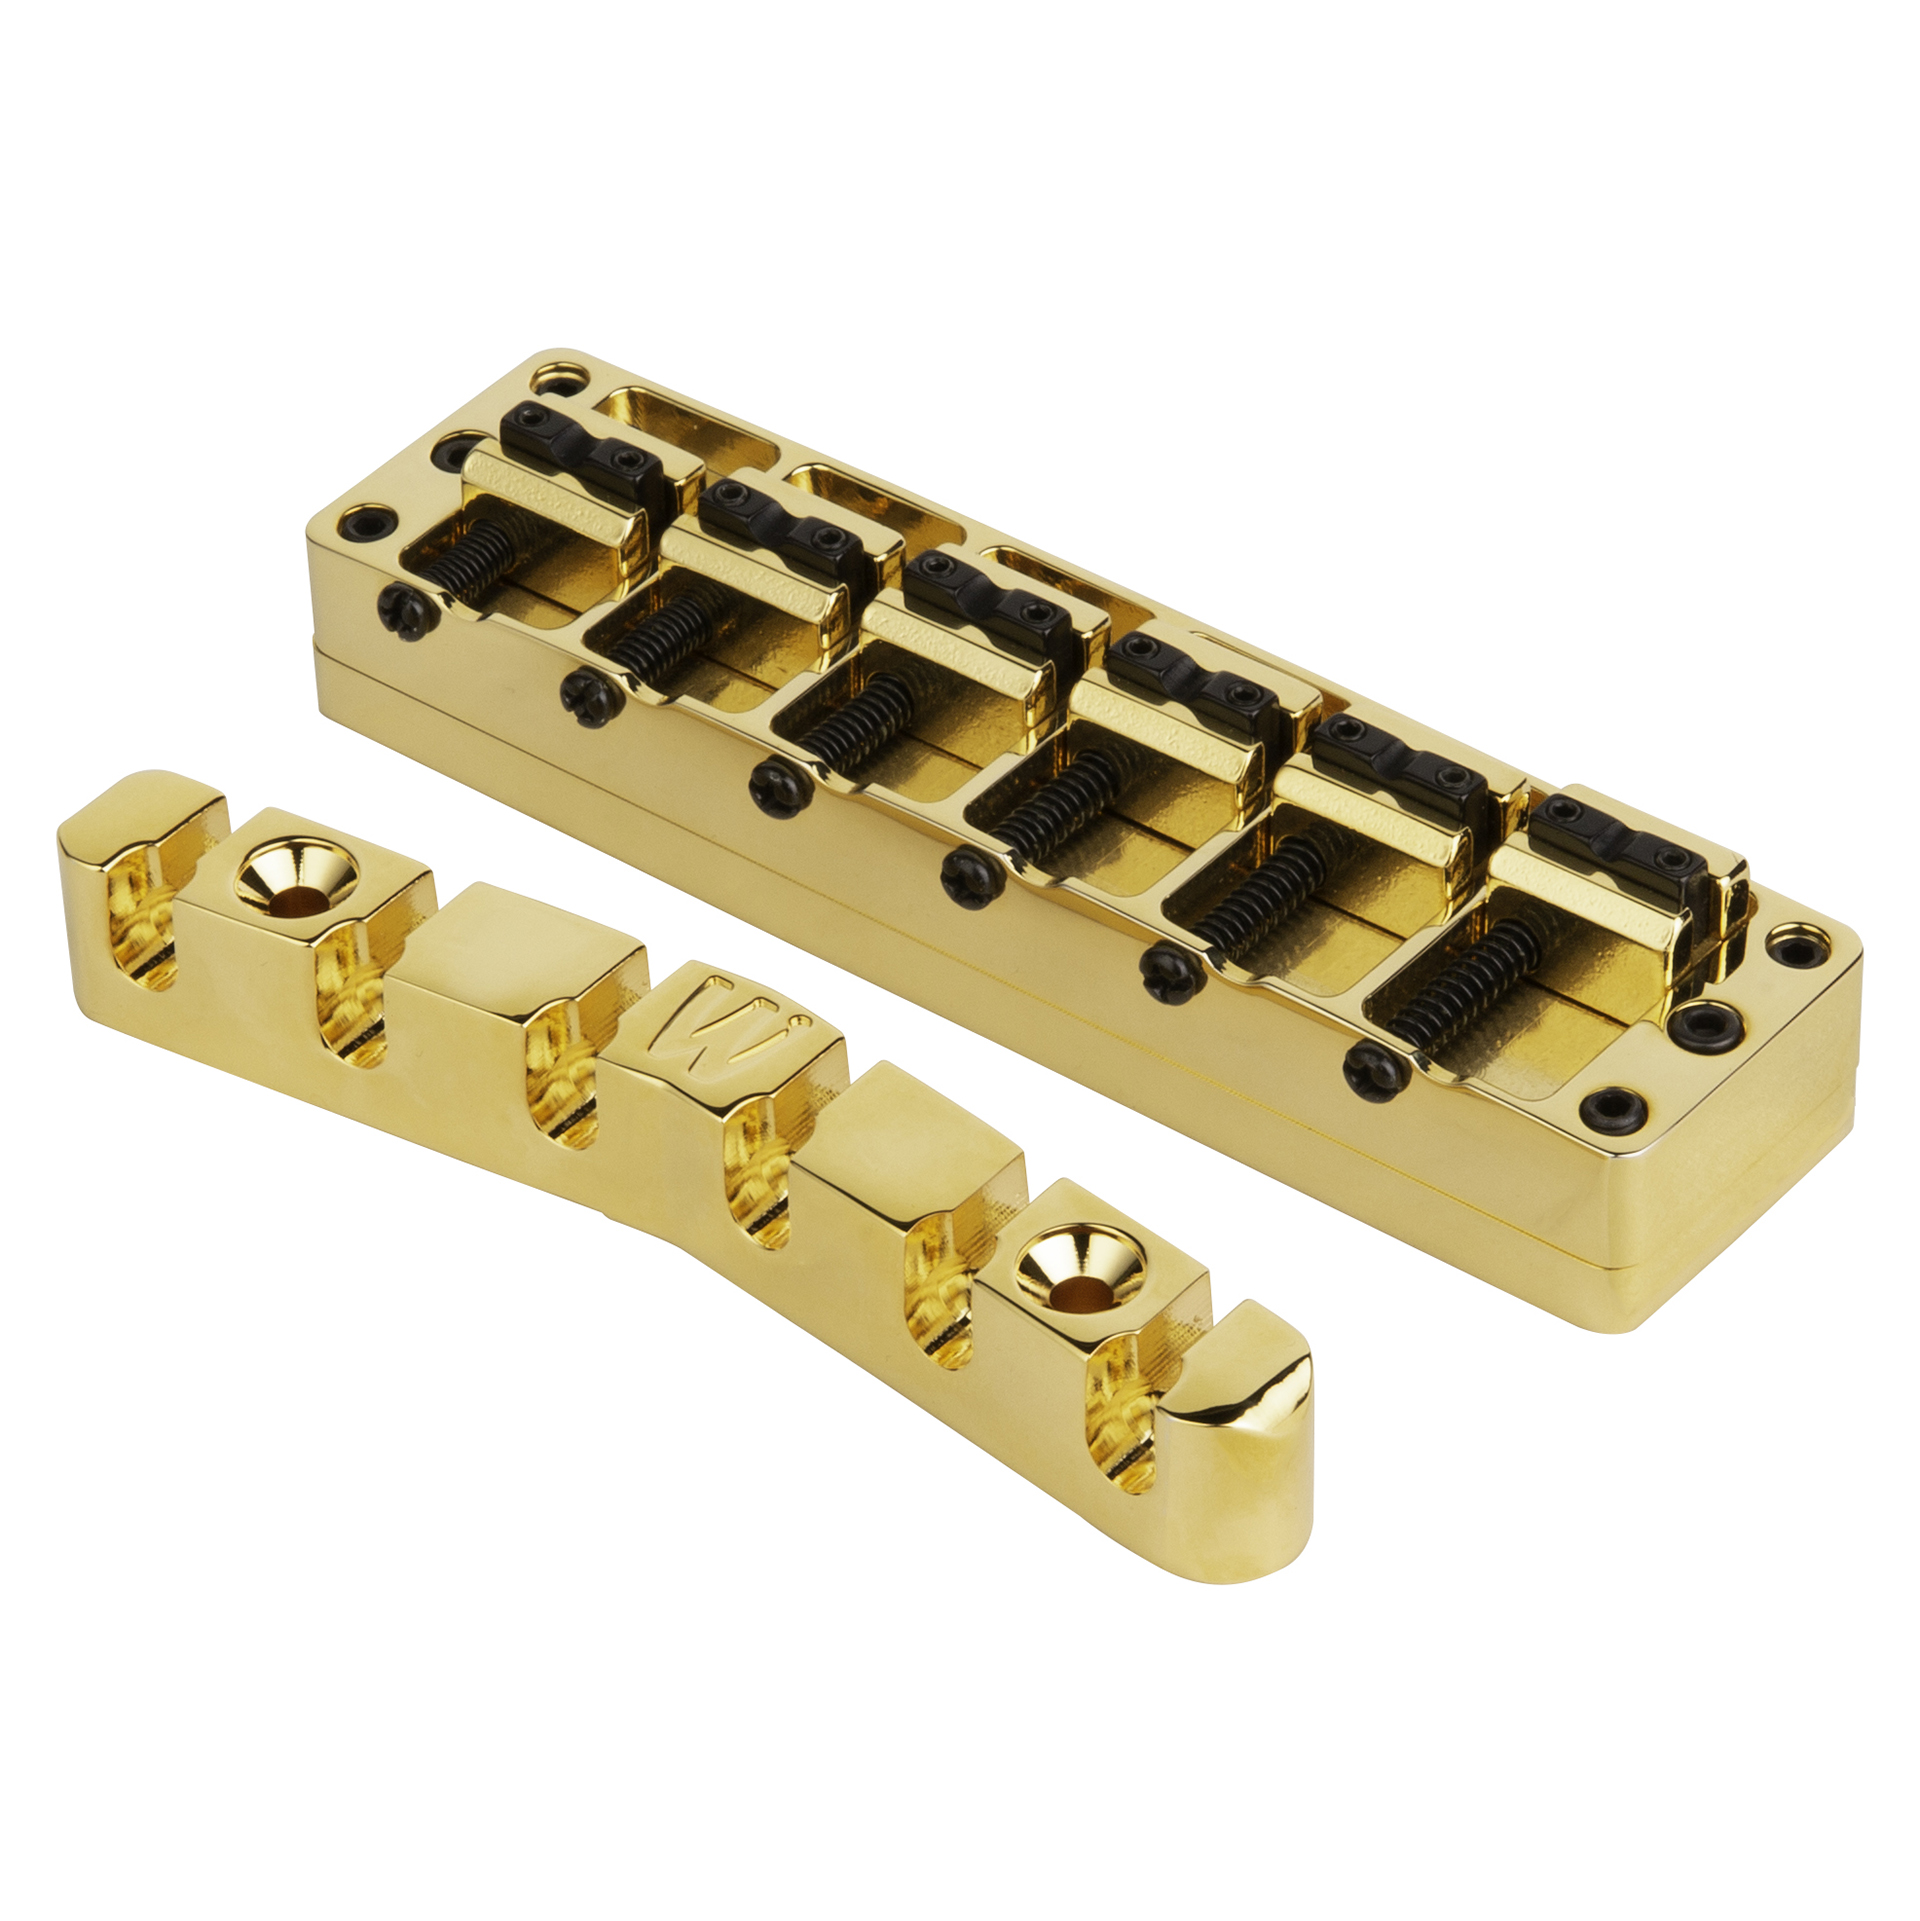 Warwick Parts - Bridge + Tailpiece, 6-String, Broadneck, Brass / Gold